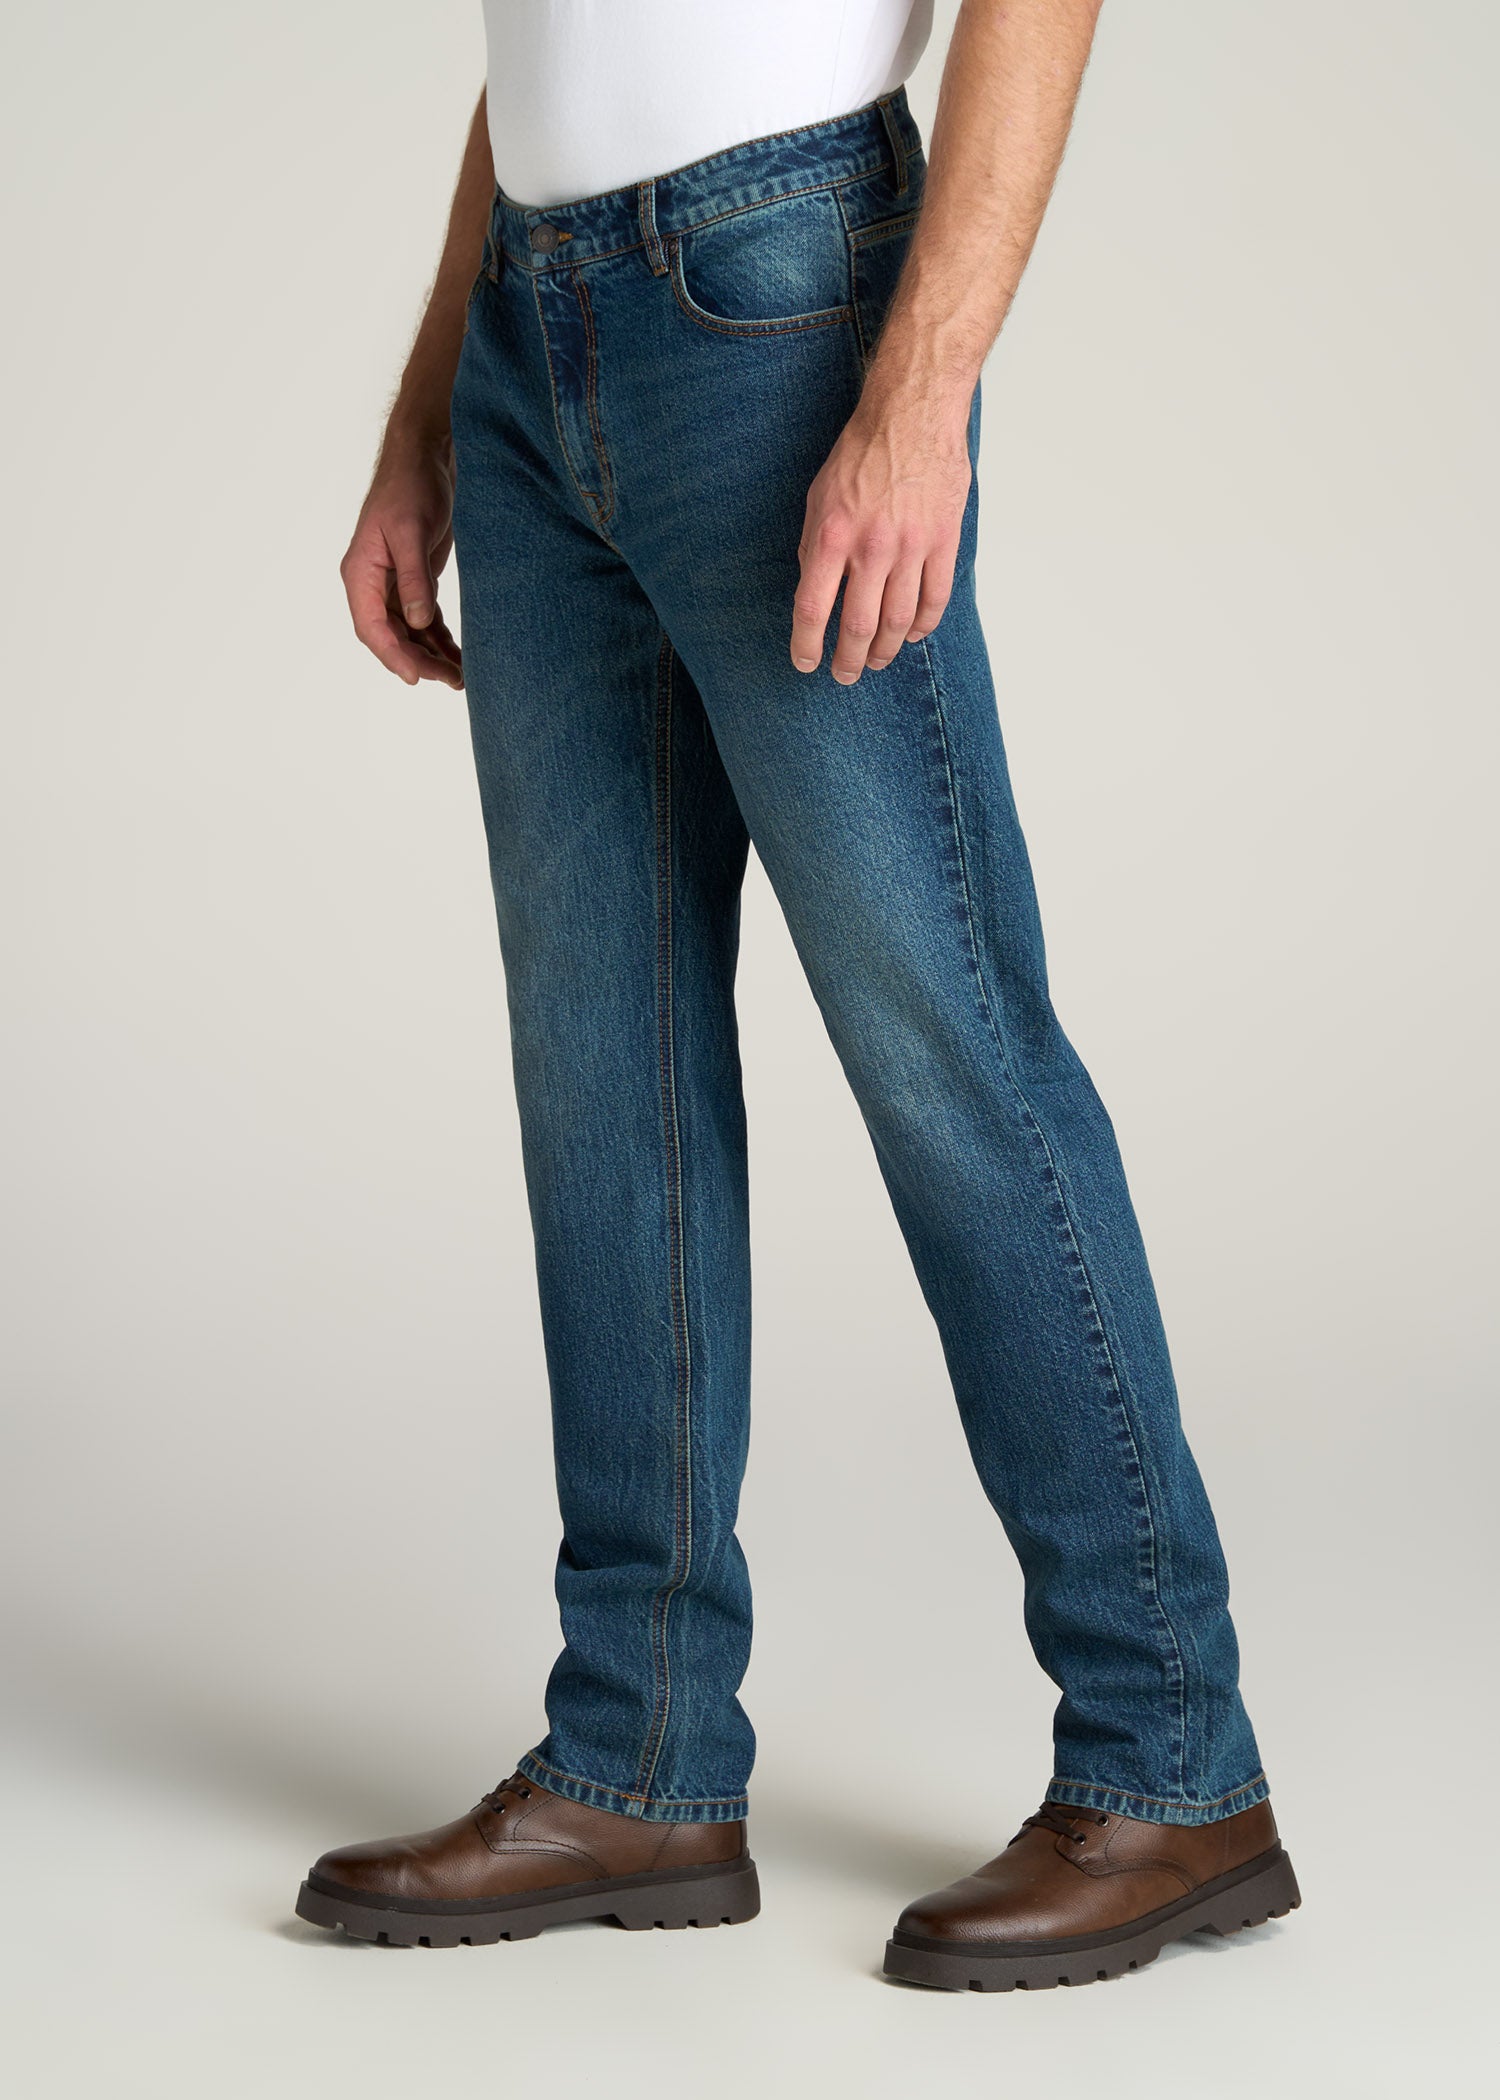 LJ&S Men's Tall Jeans Straight Leg Machine Blue